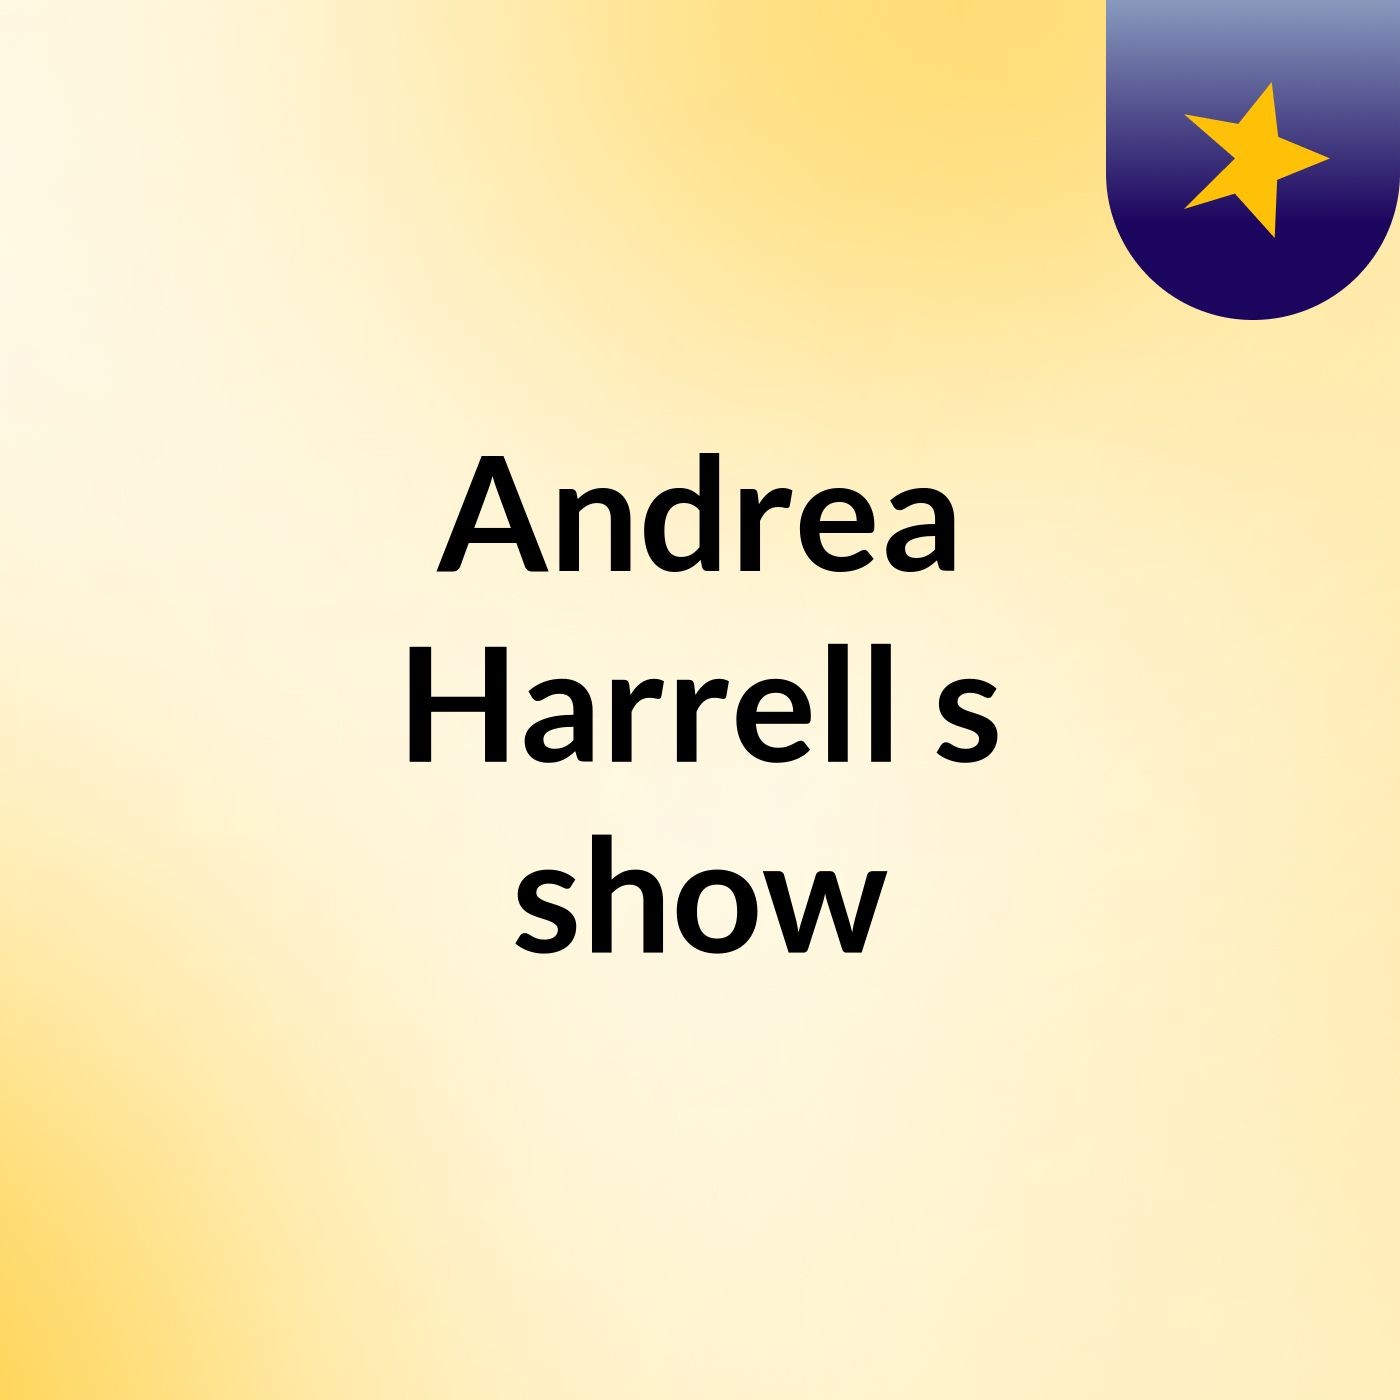 Andrea Harrell's show